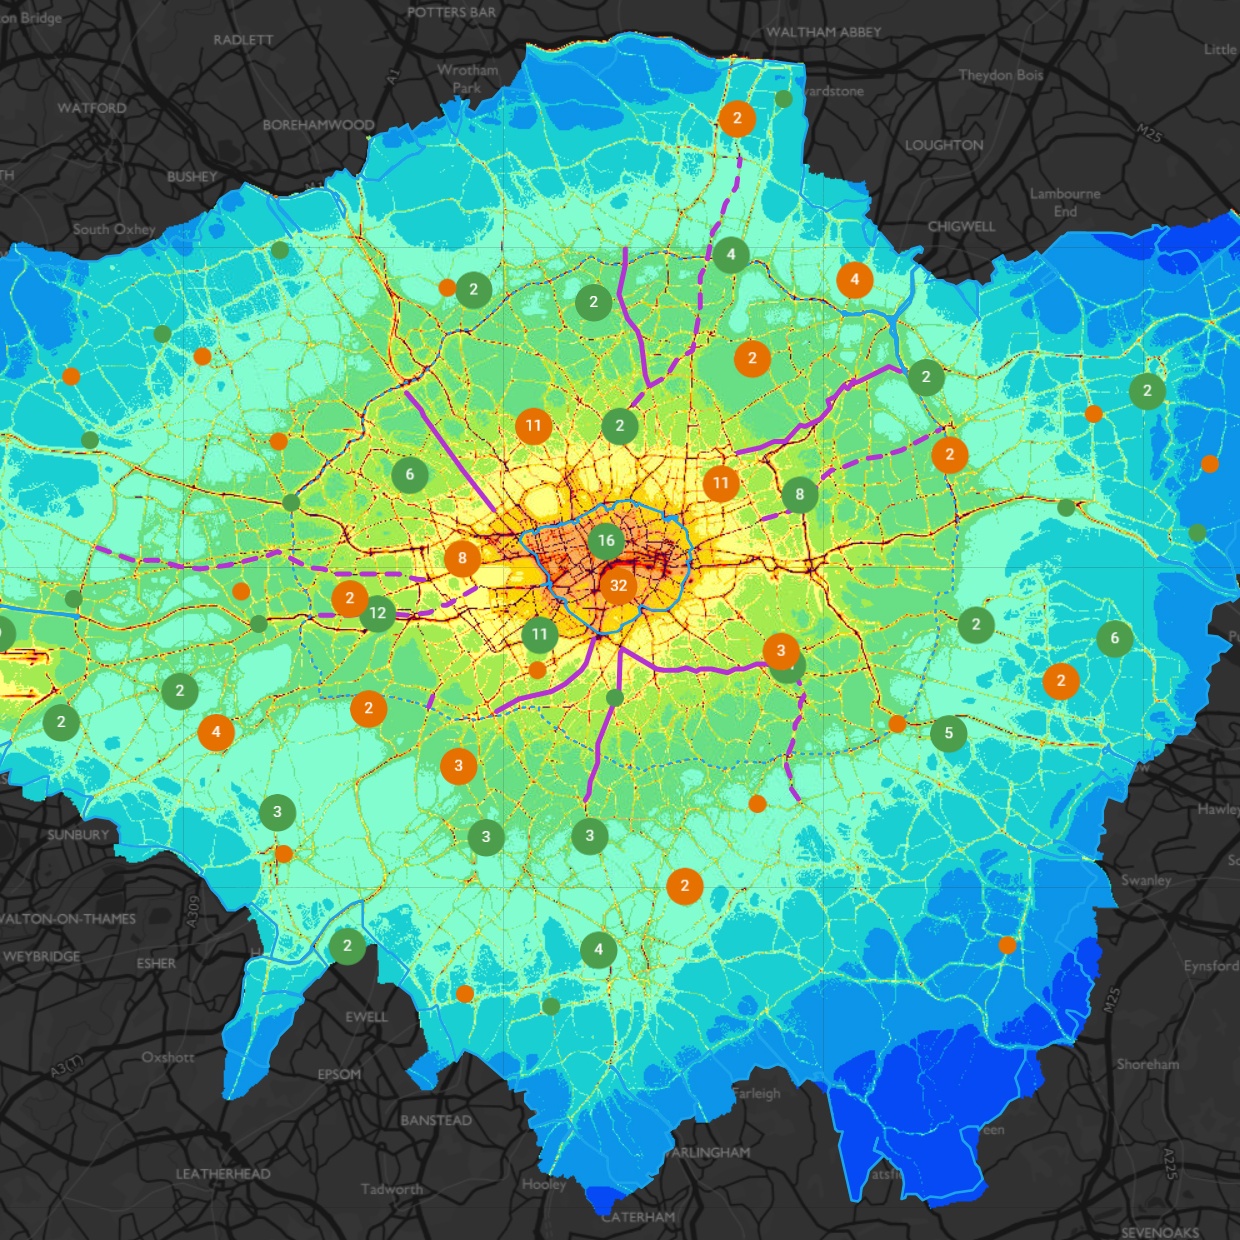 London air quality map | London City Hall